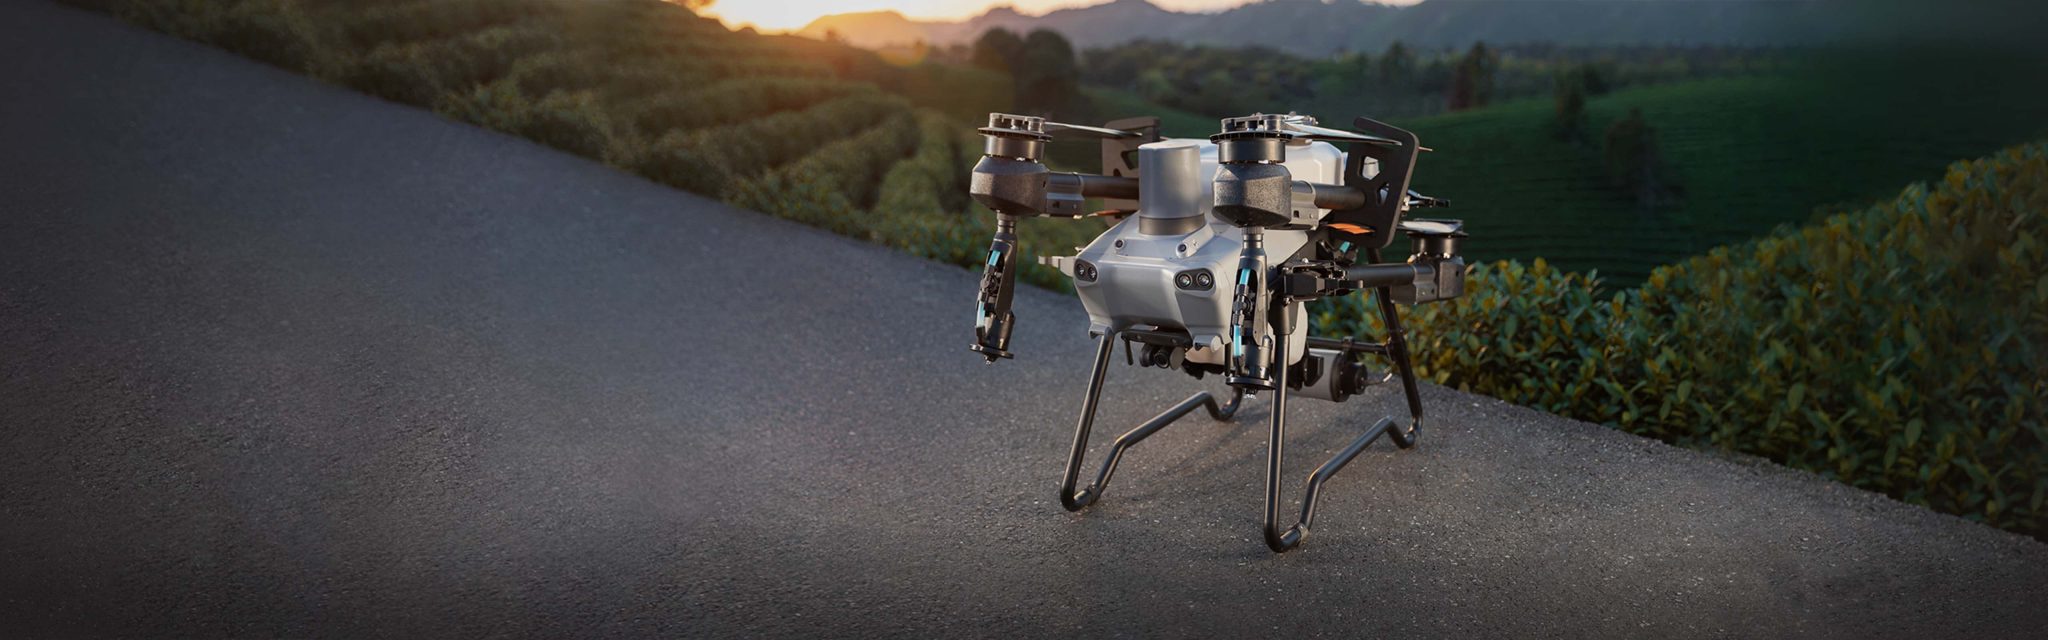 DJI Agras T25 drone agricolo 